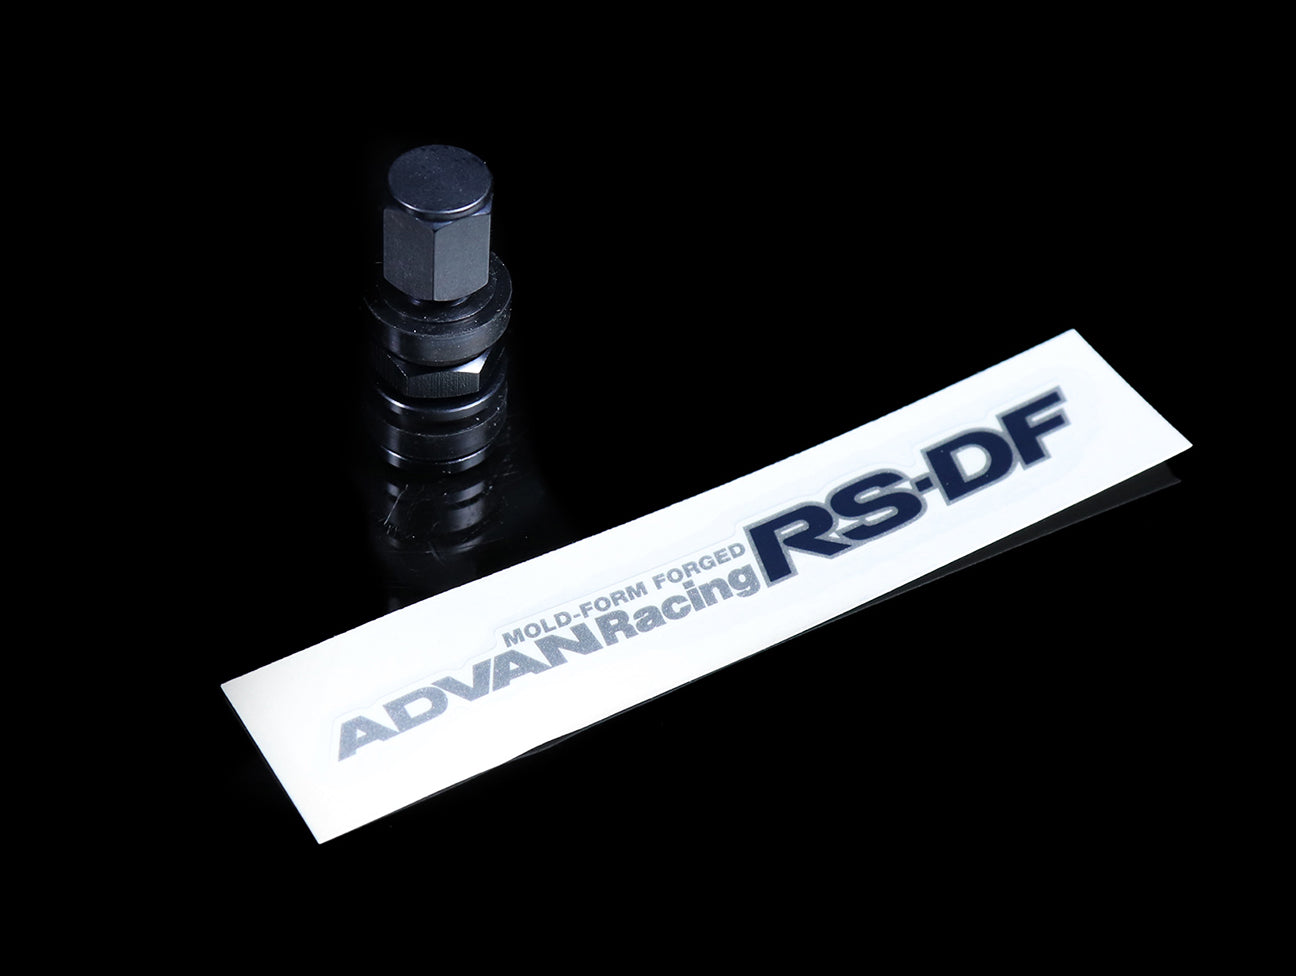 Advan Racing RS-DF Progressive Wheels - Machine Hyper Black / 19x9.5 / 5x120 / +35